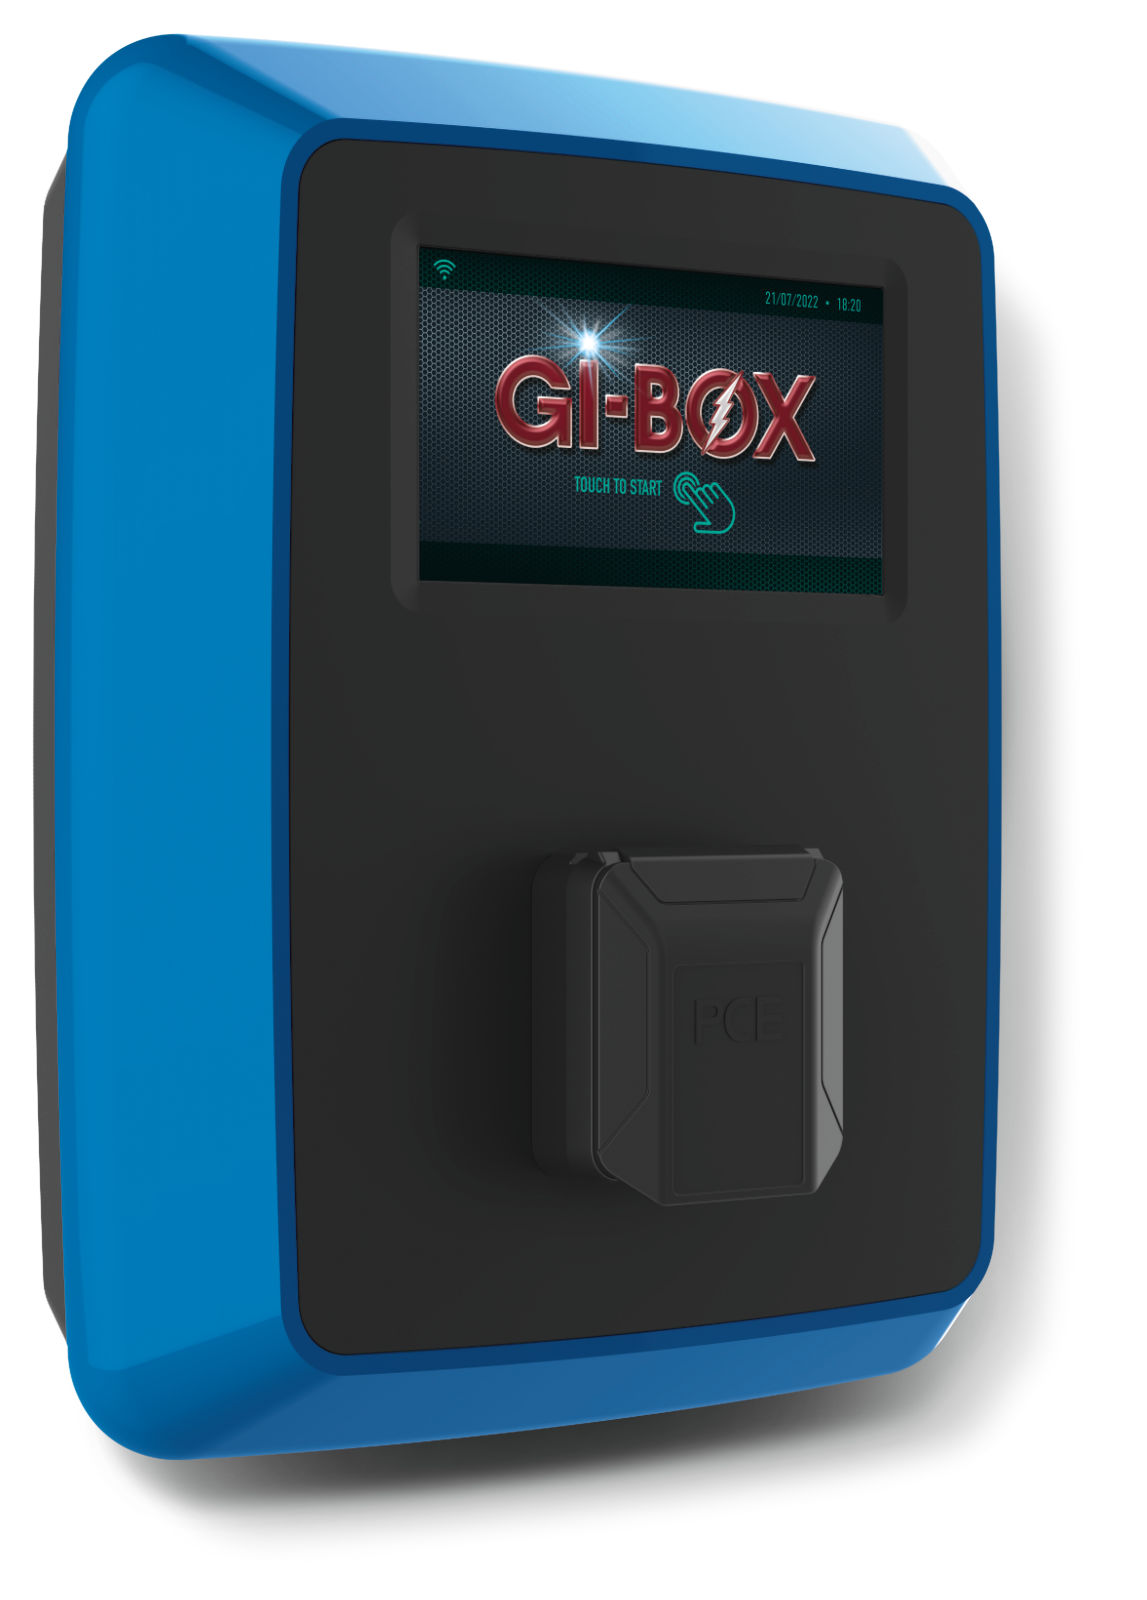 GI-BOX Wallbox